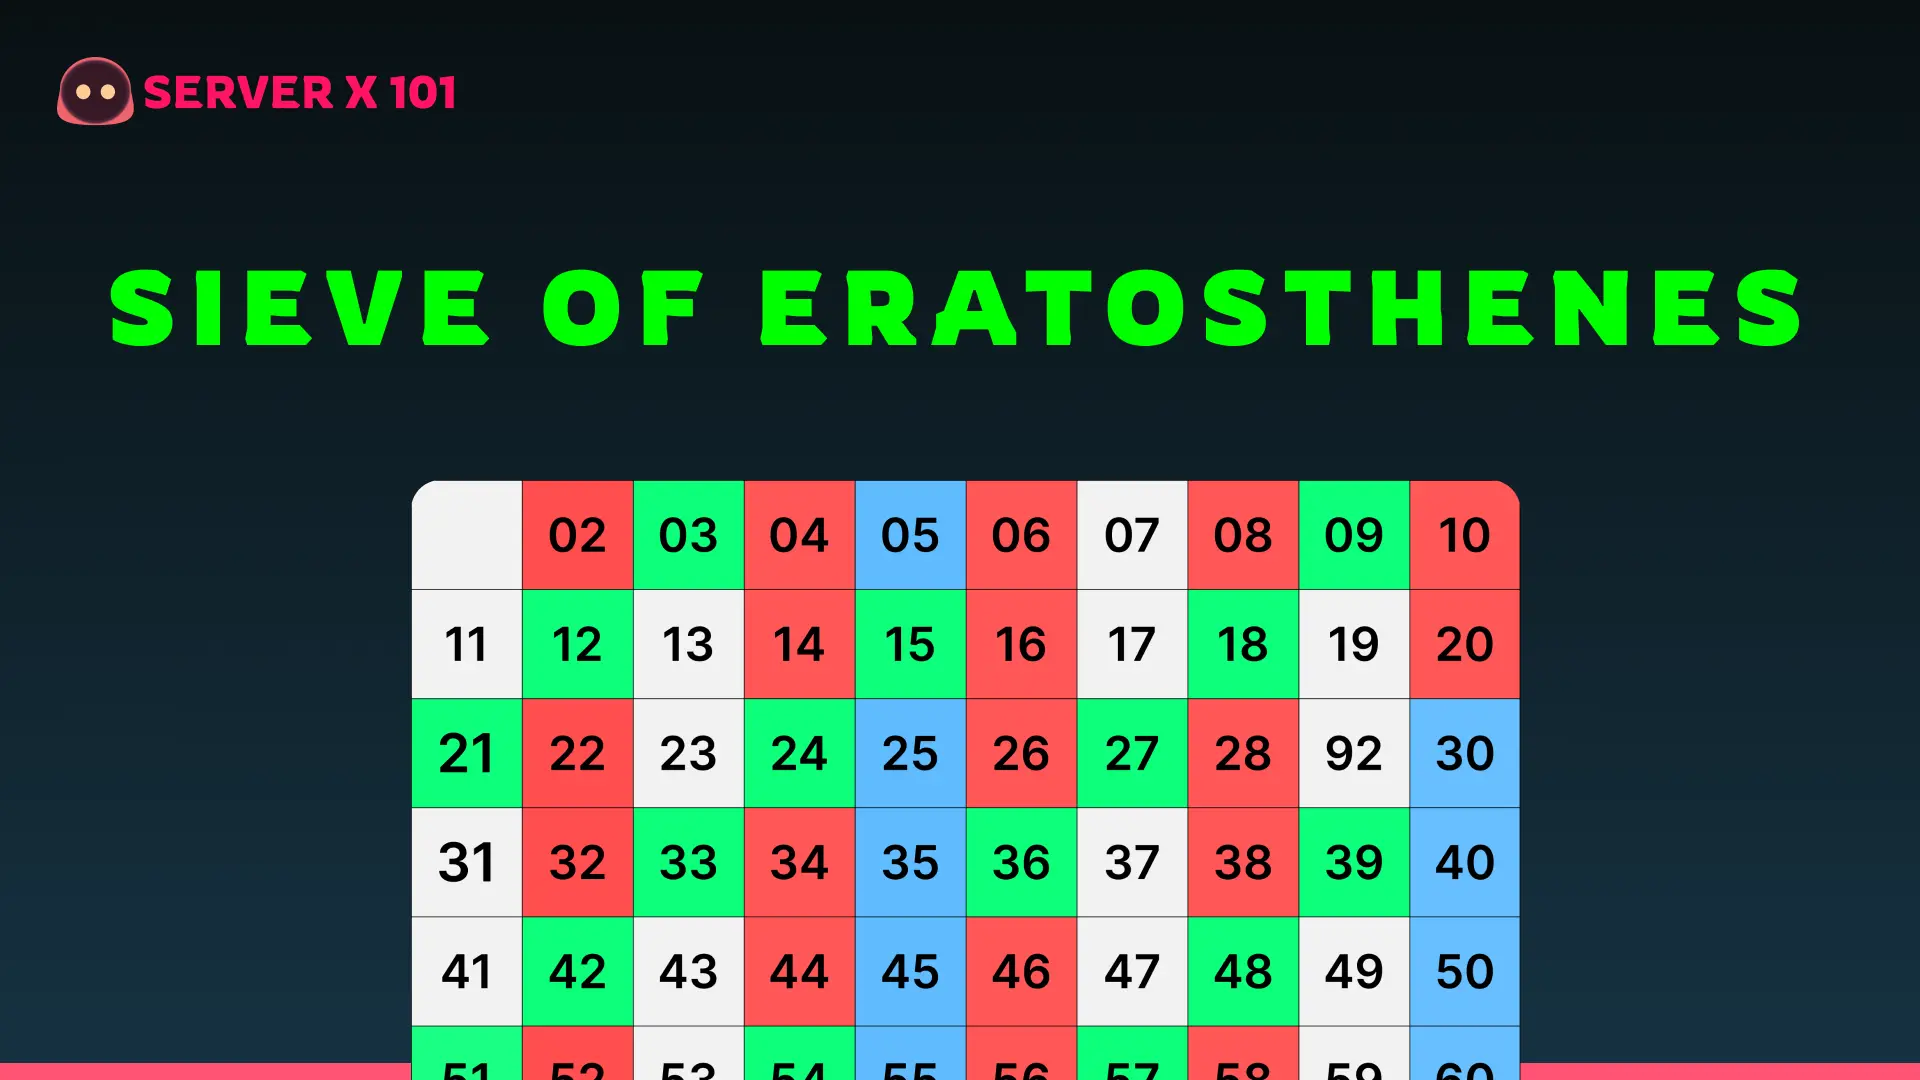 Sieve of Eratosthenes Algorithm